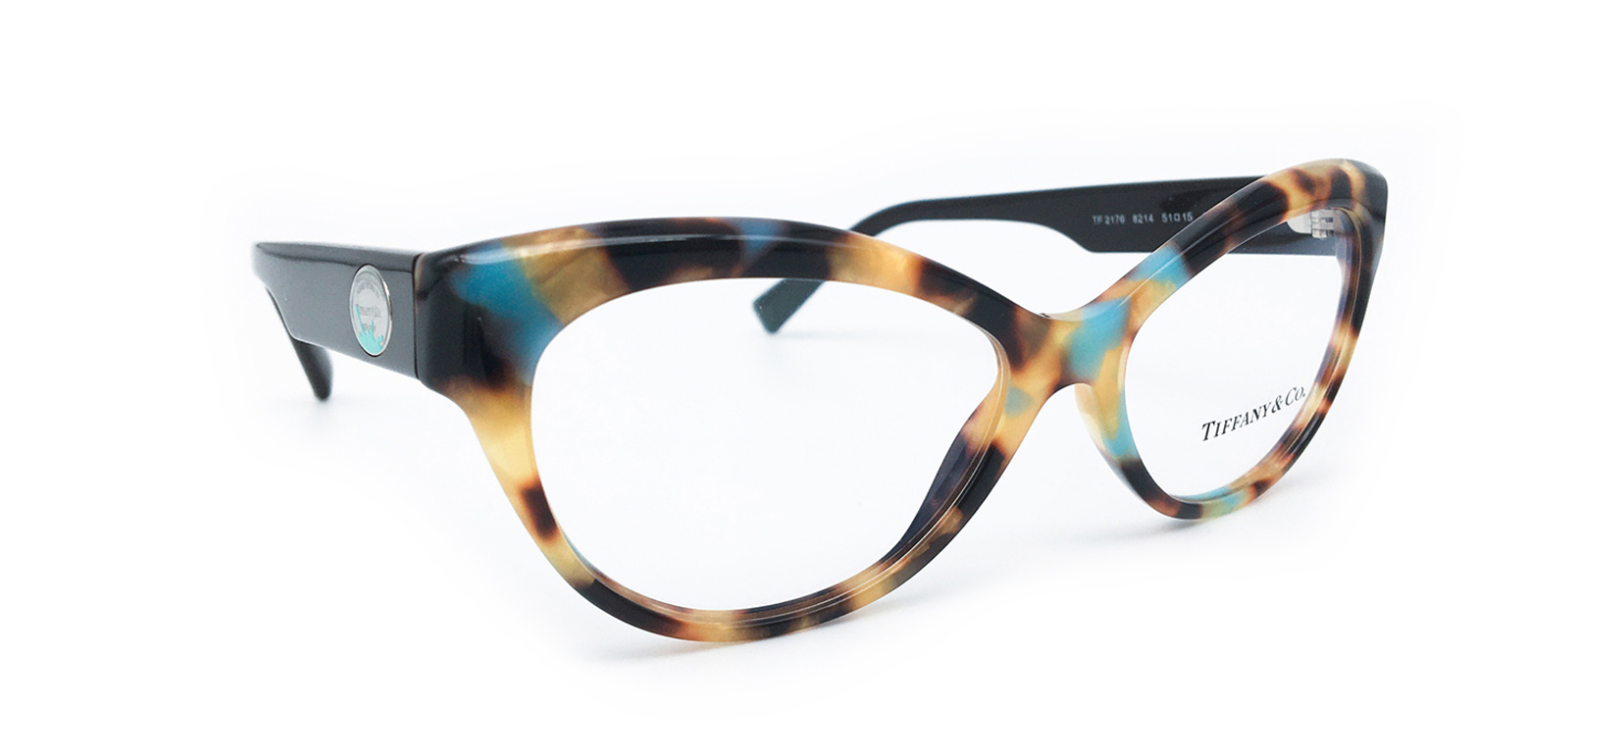 Tortoiseshell glasses | North Essex optician - Patrick & Menzies